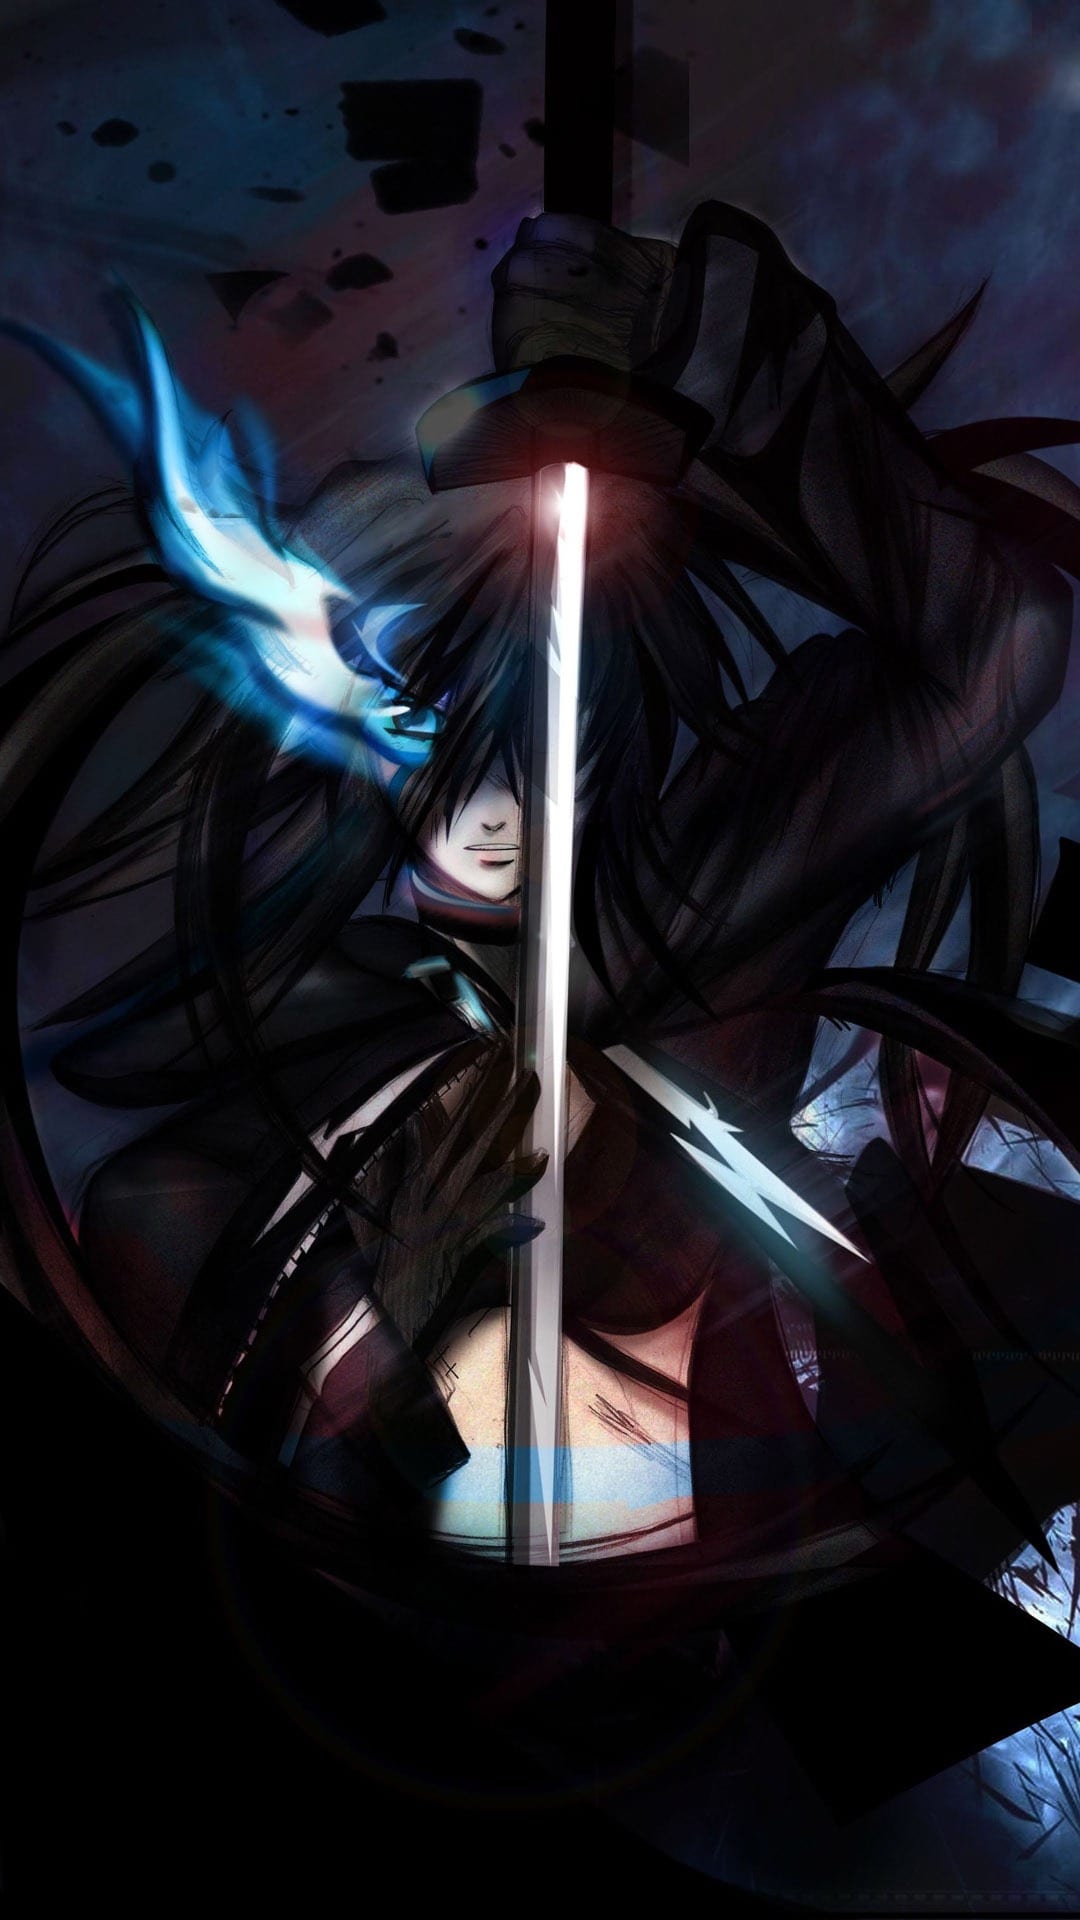 imagenes wallpapers anime,cg artwork,darkness,fictional character,sword,illustration